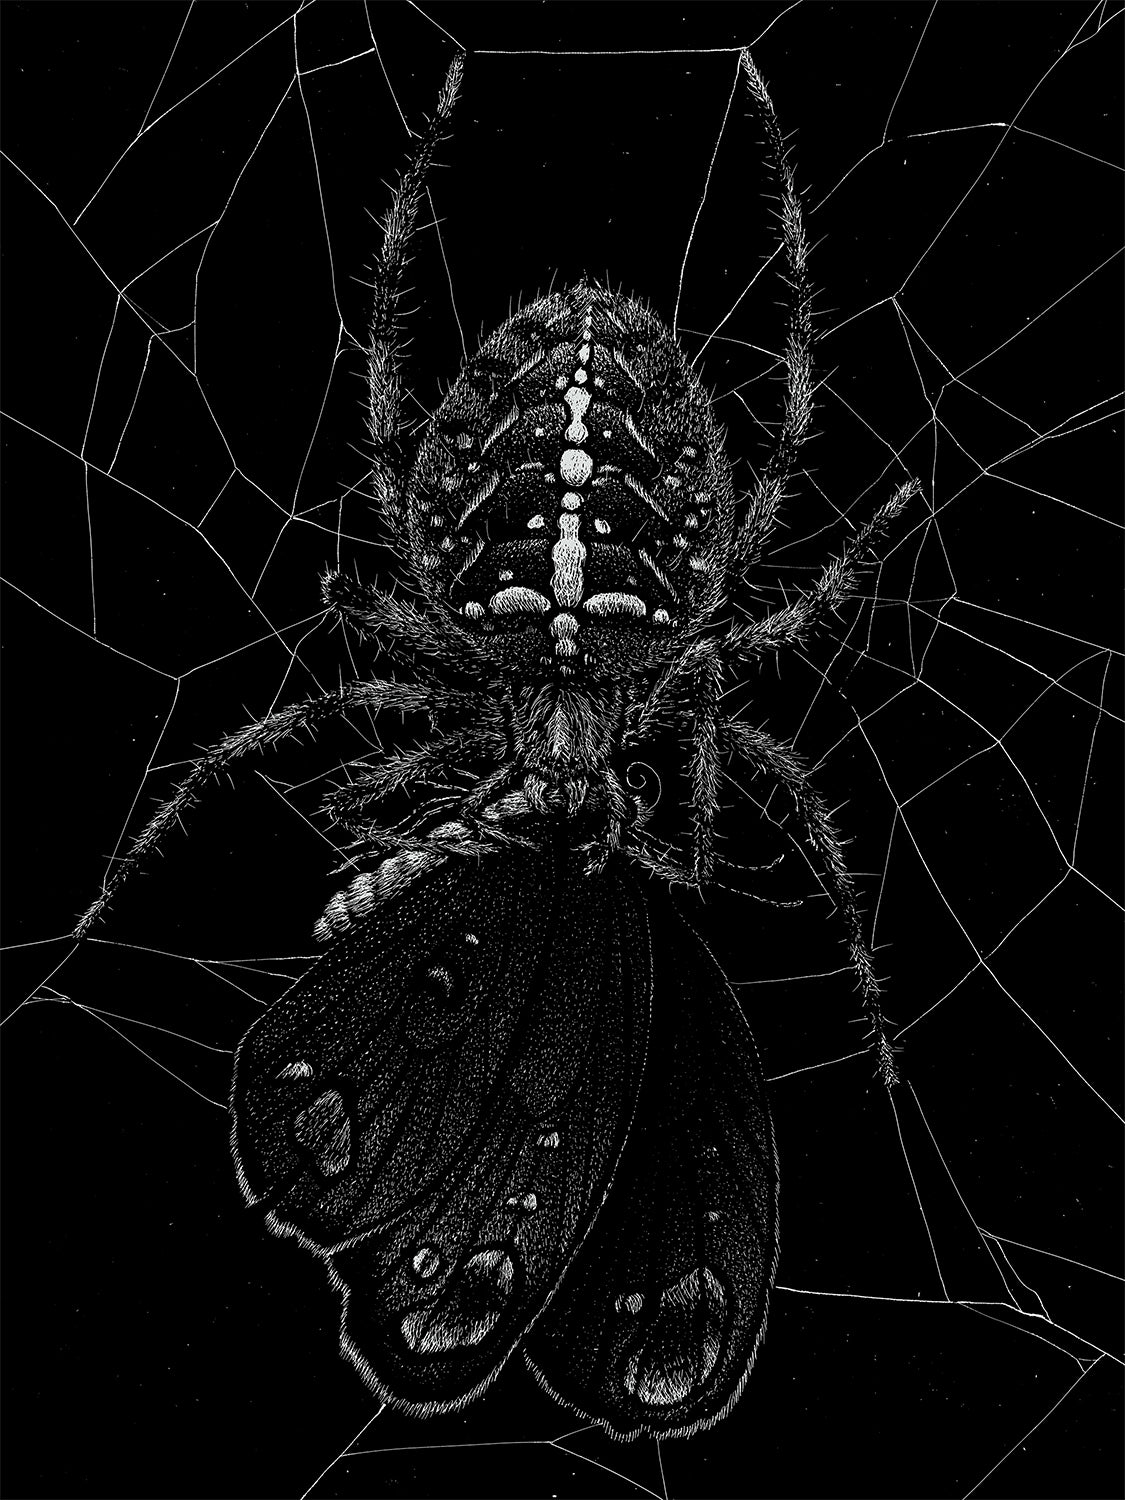 "Spider" by Janta Island